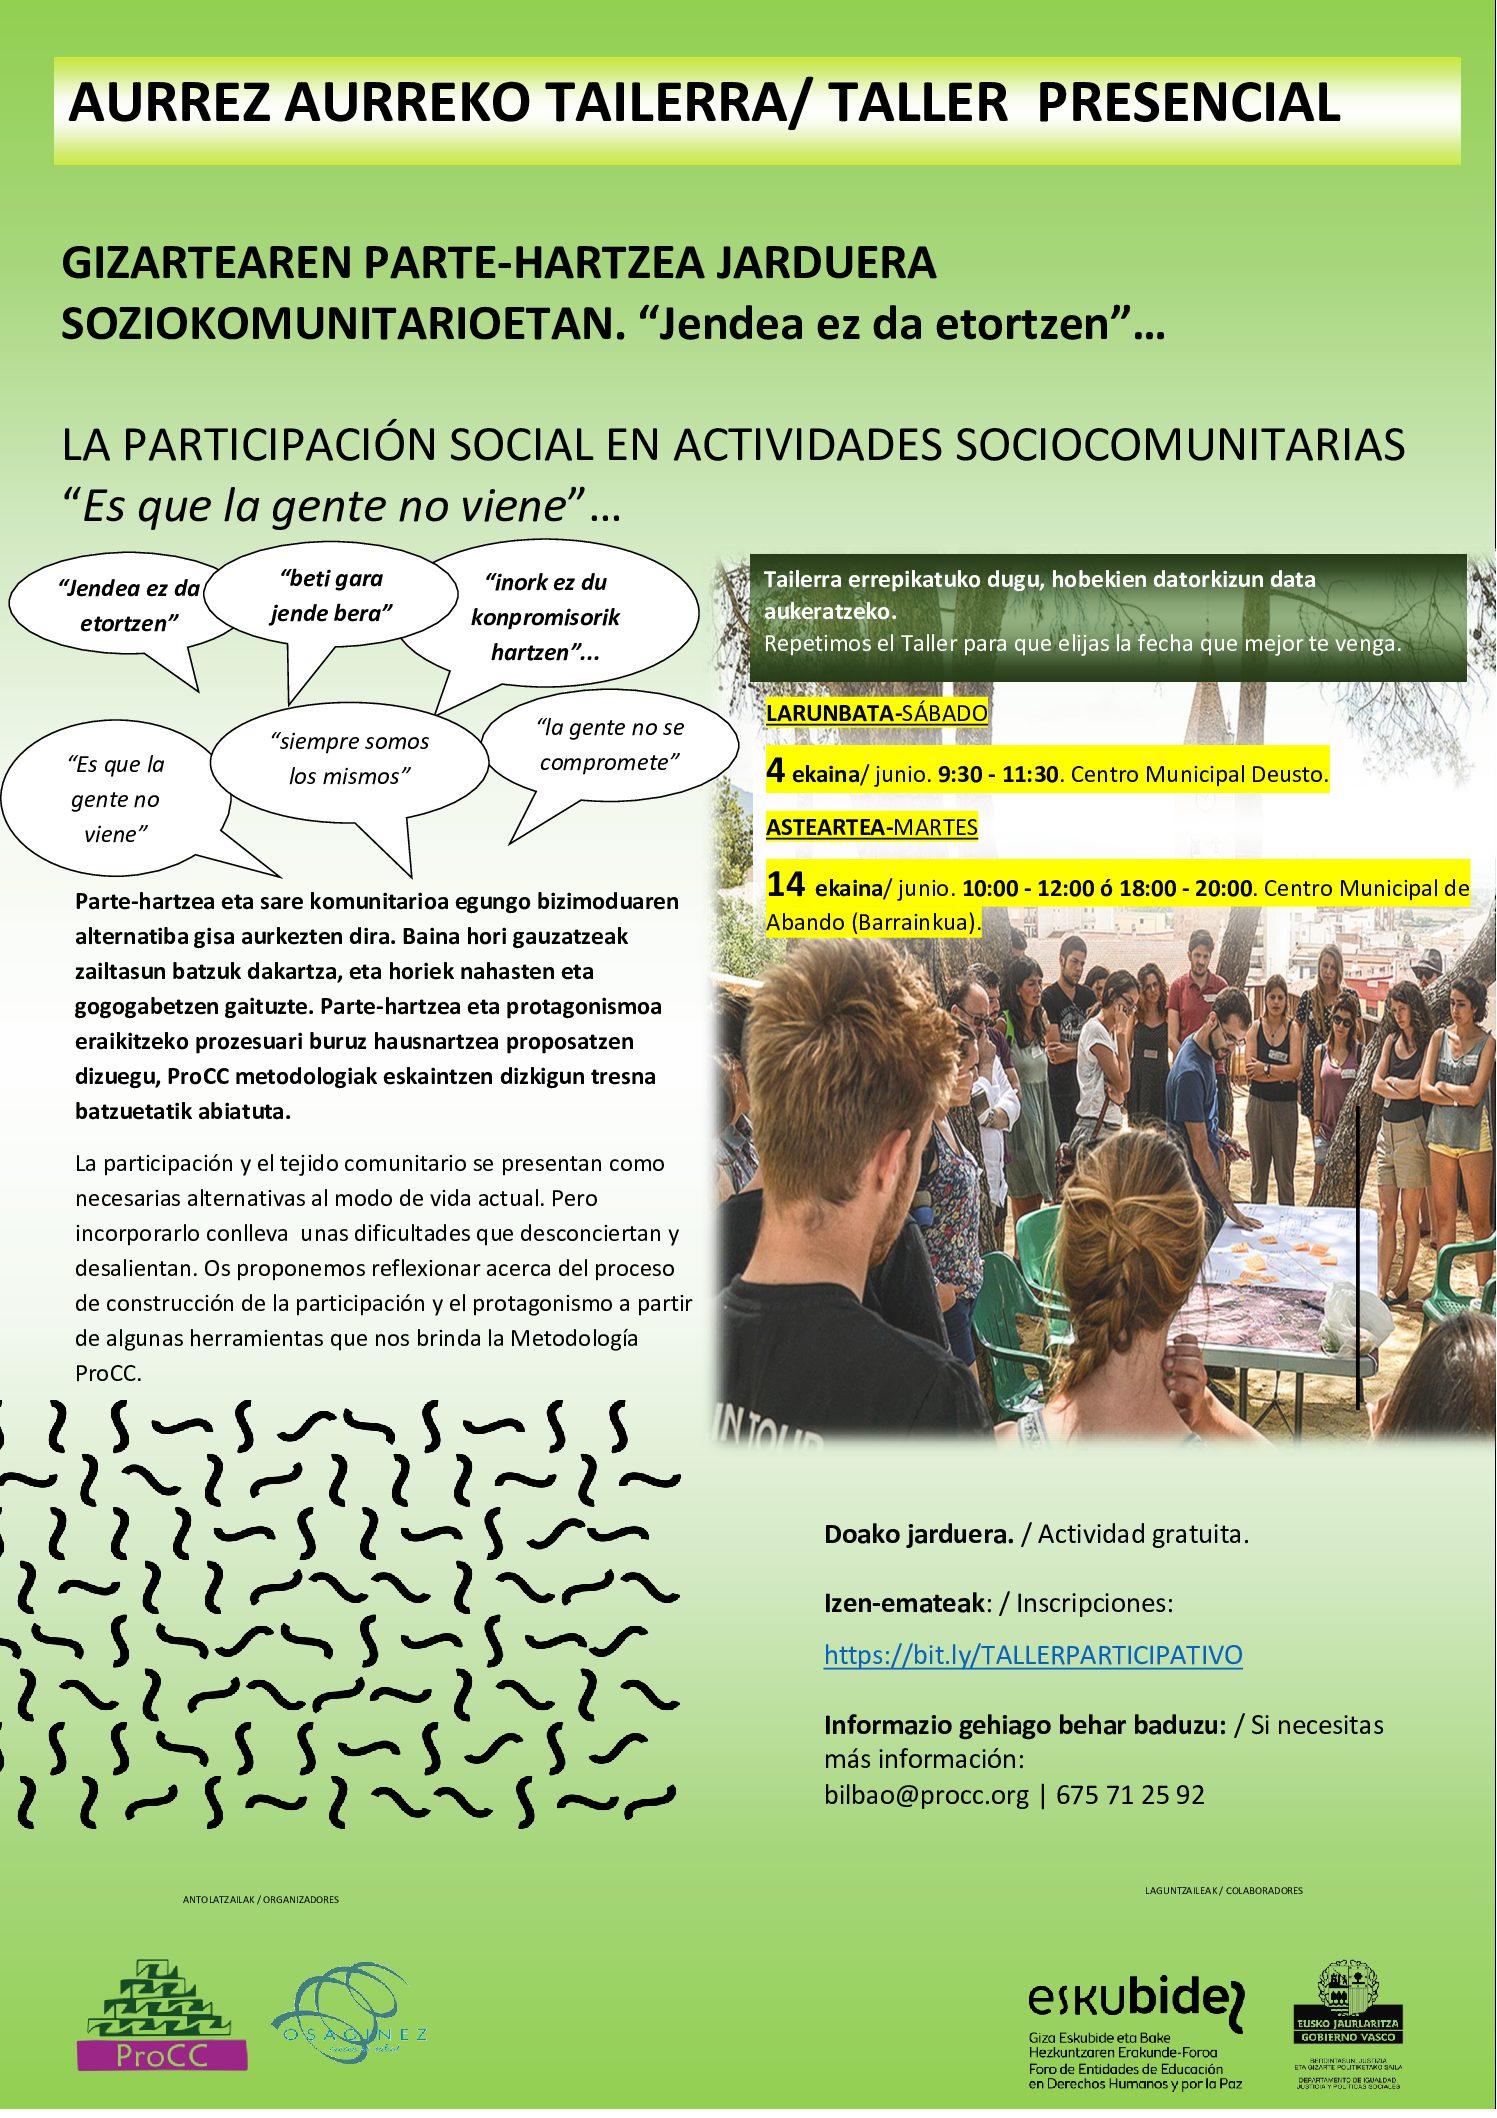 Taller La participación social en actividades sociocomunitarias